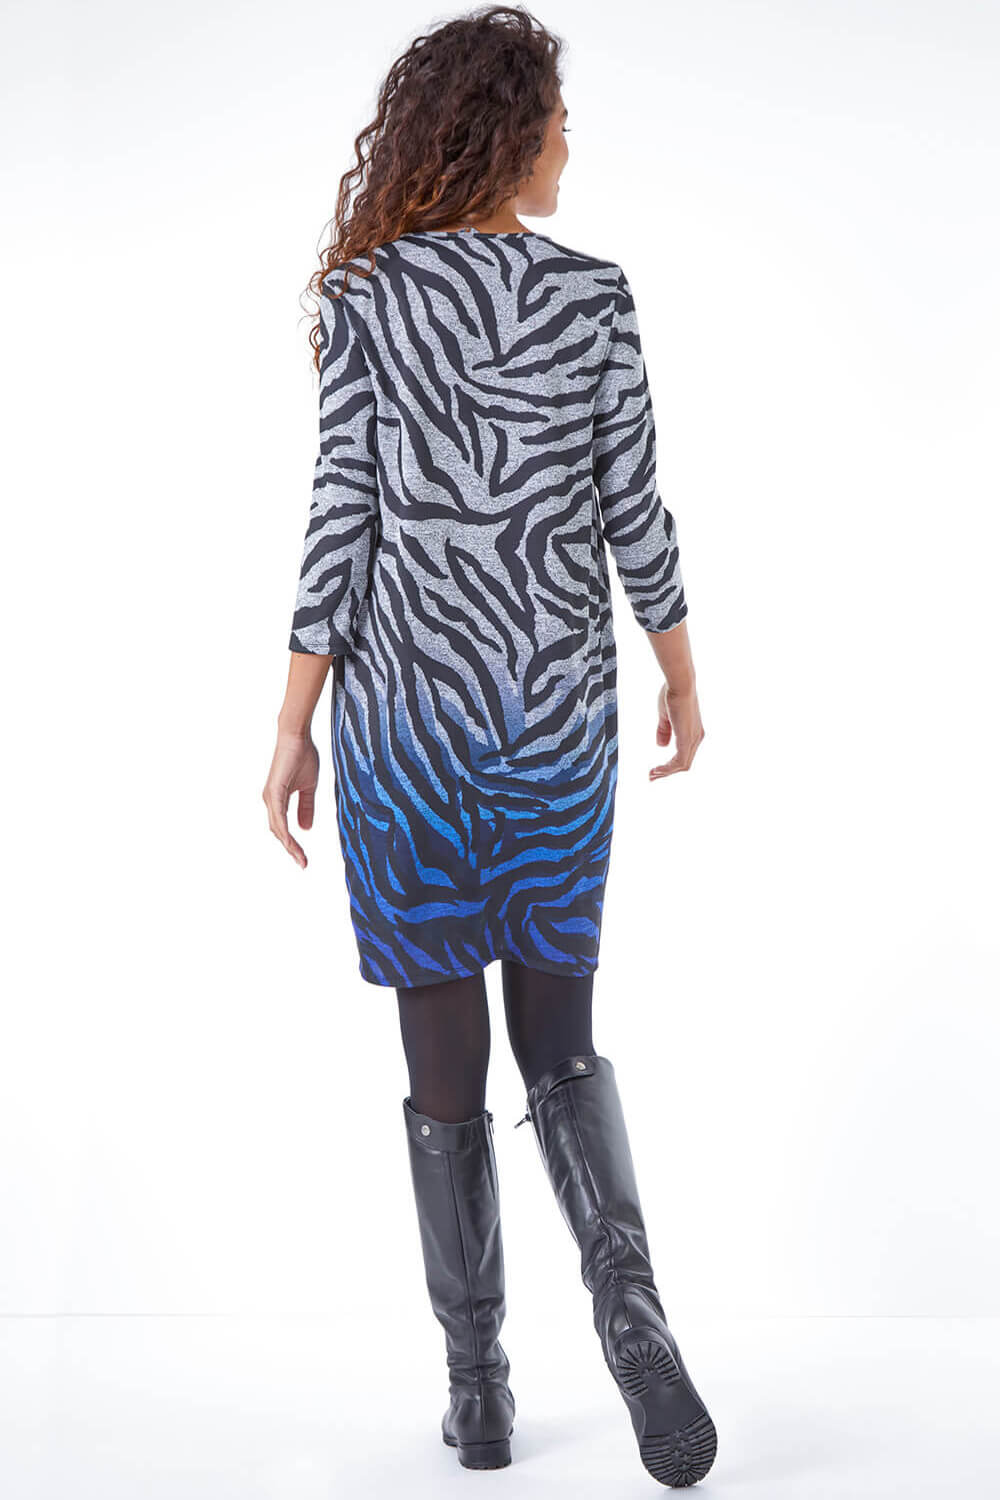 Blue Zebra Print Ombre Cocoon Dress, Image 3 of 5